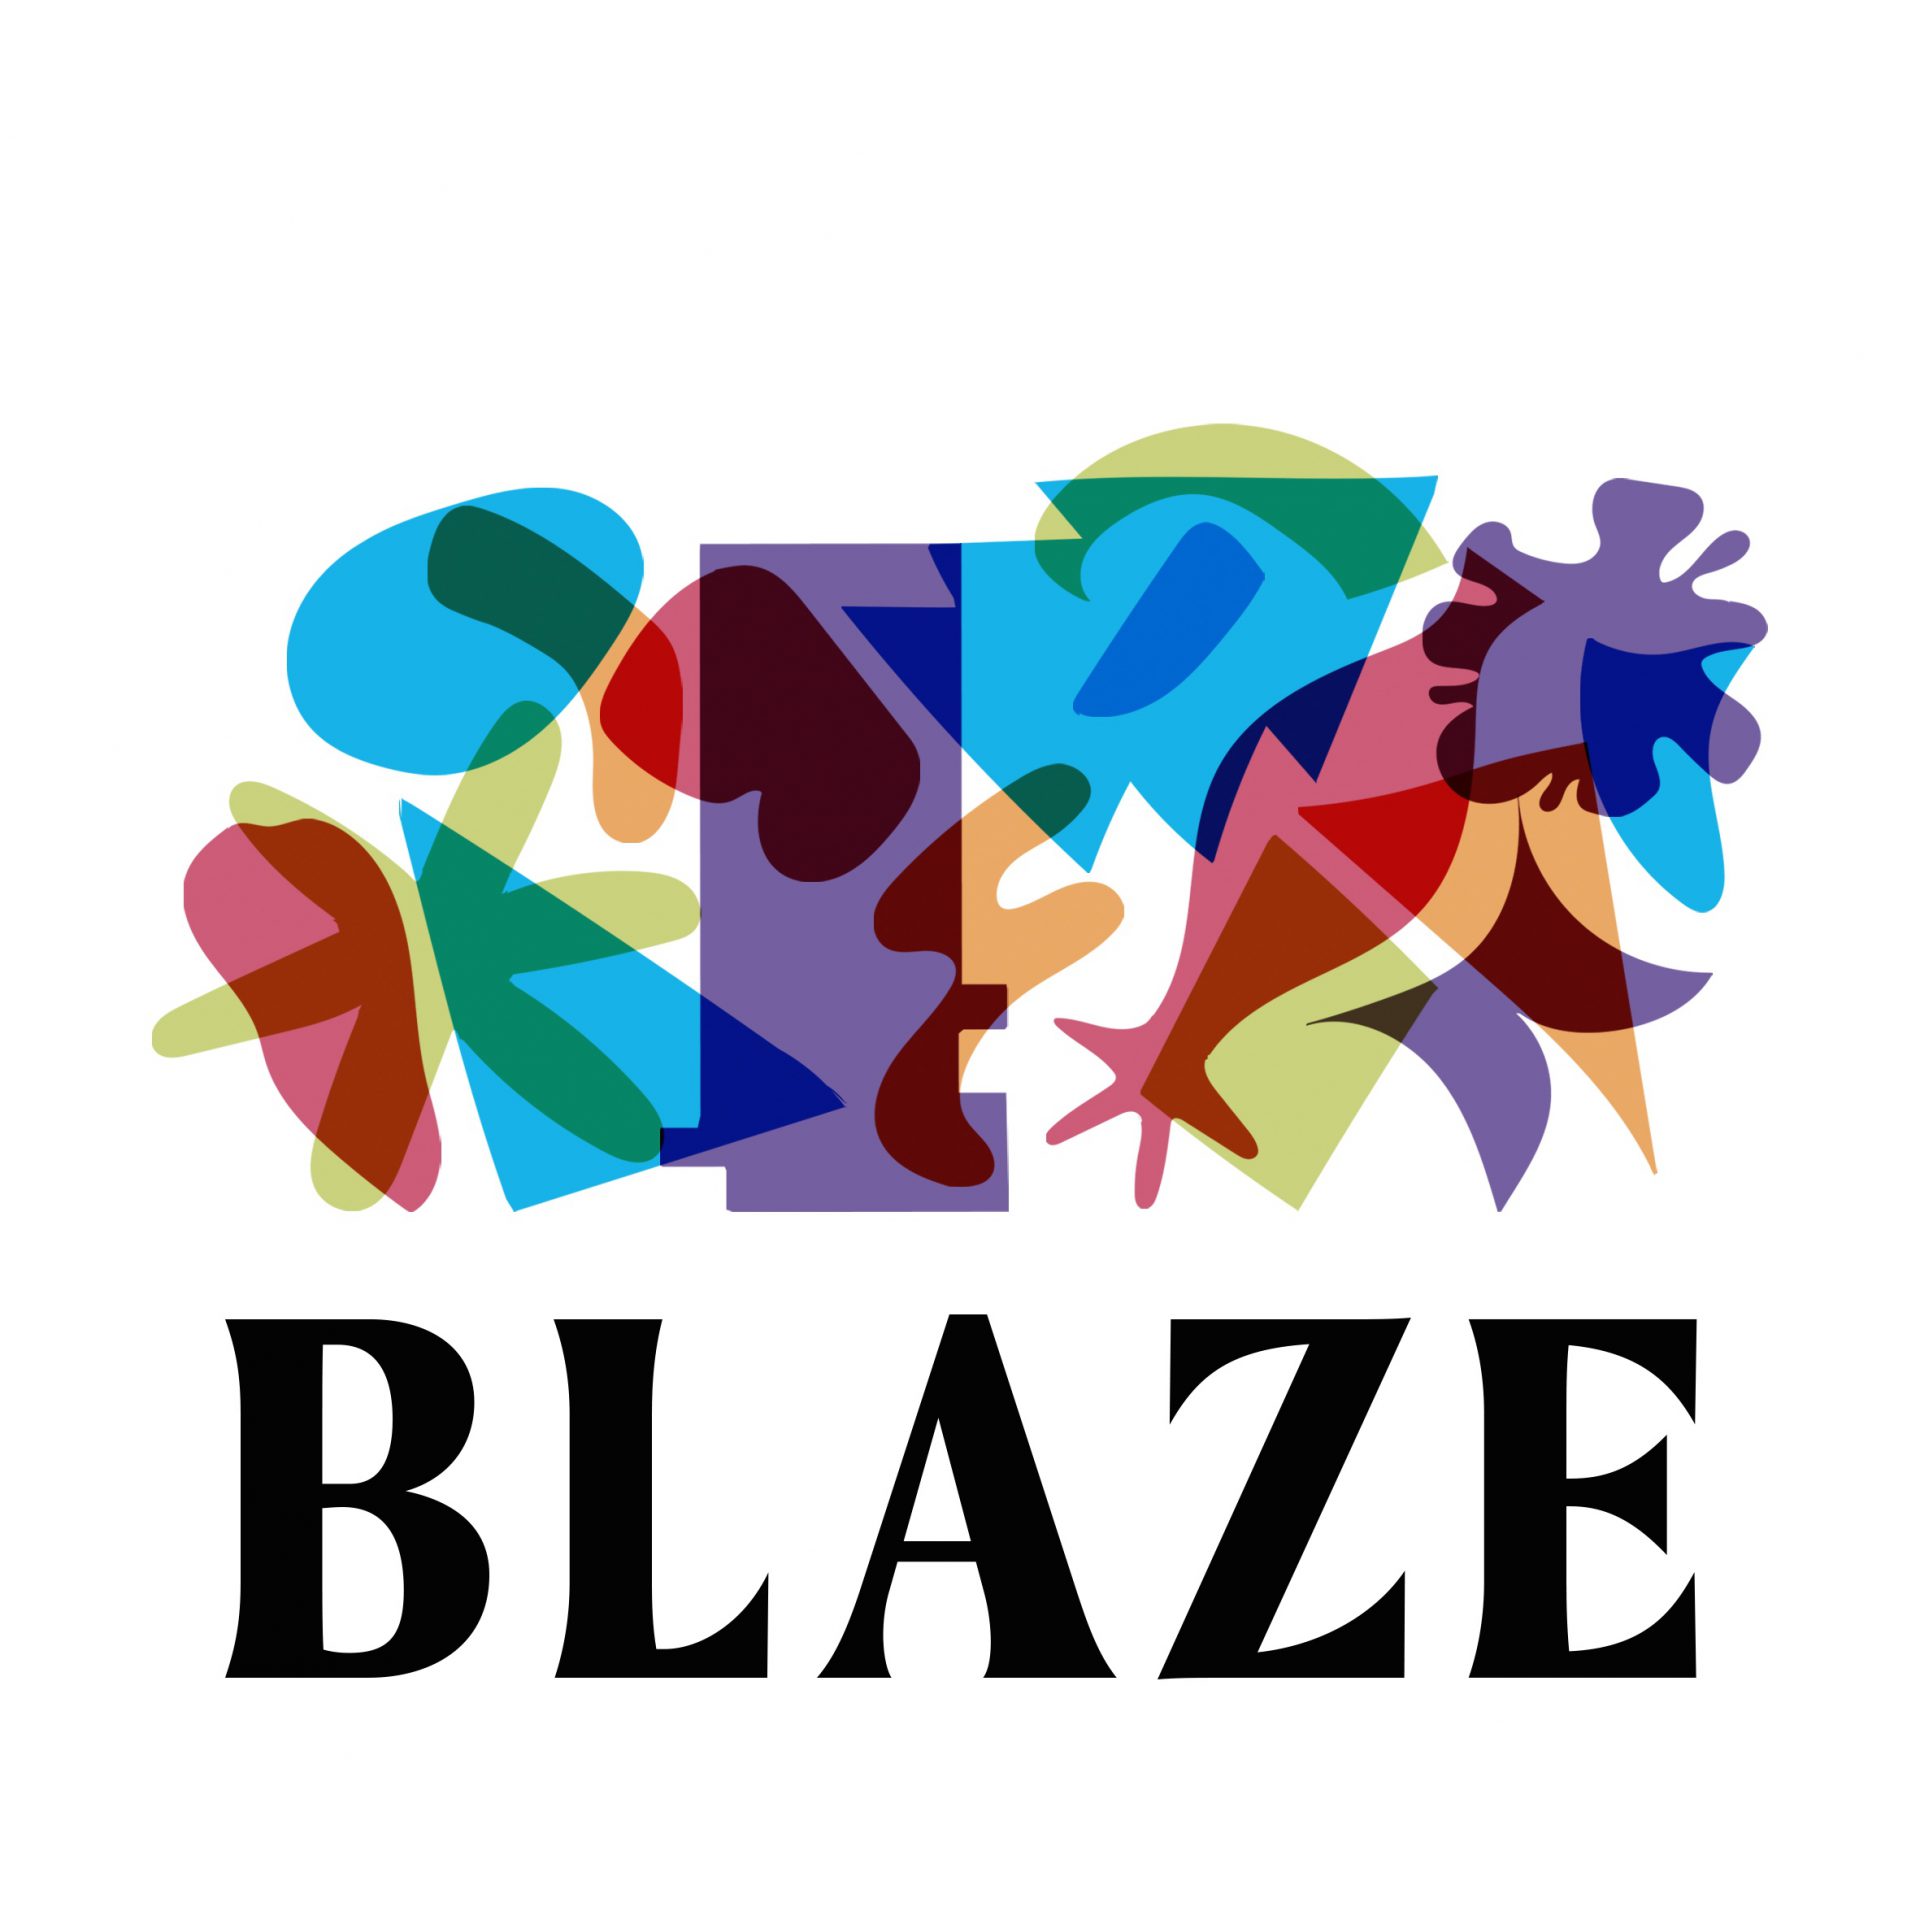 Blaze Beat logo for BBQ restaurant and music club | Behance :: Behance